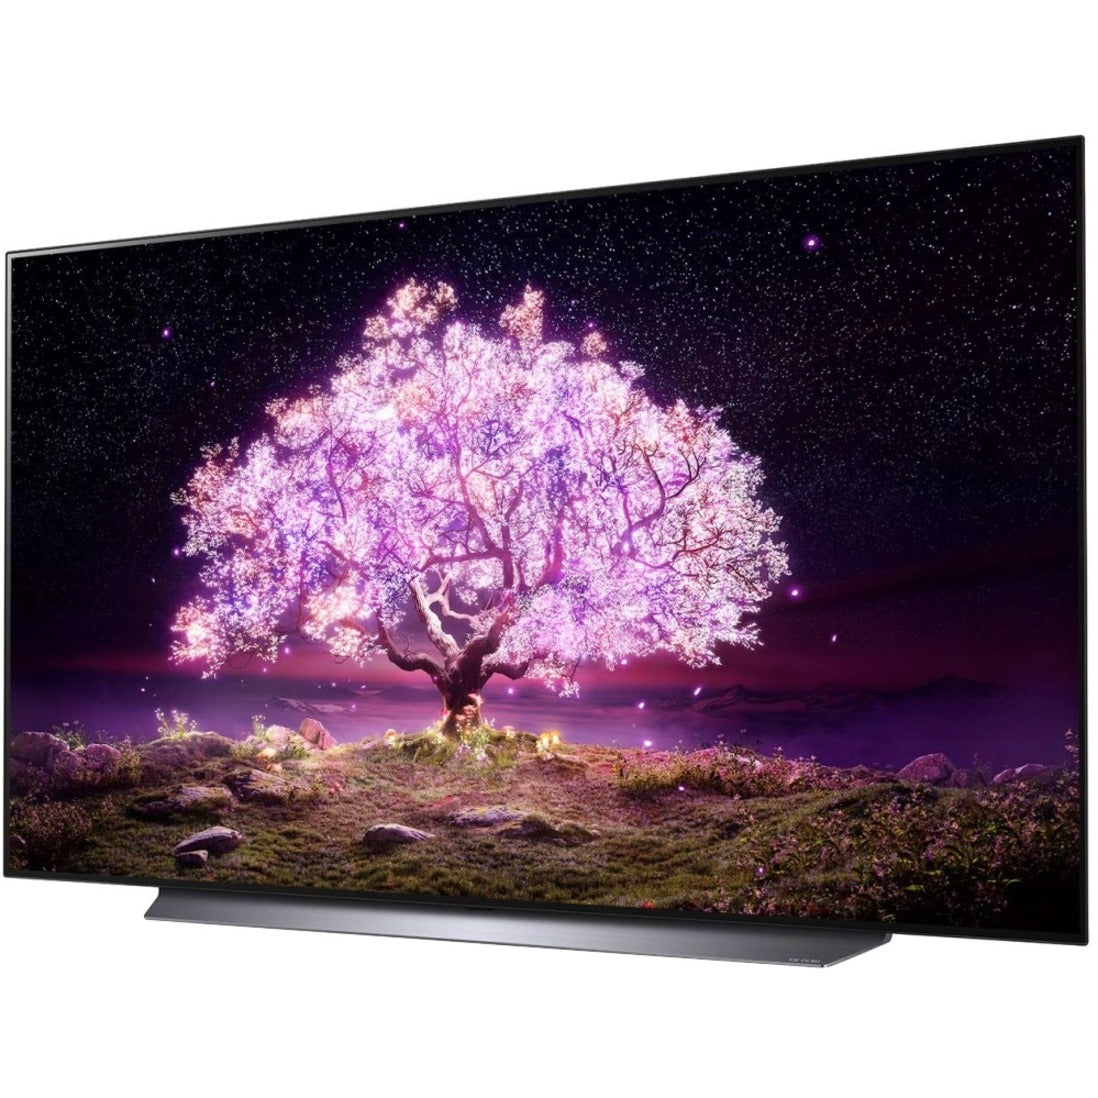 LG C1 65" Smart OLED TV - 4K UHDTV [Discontinued]